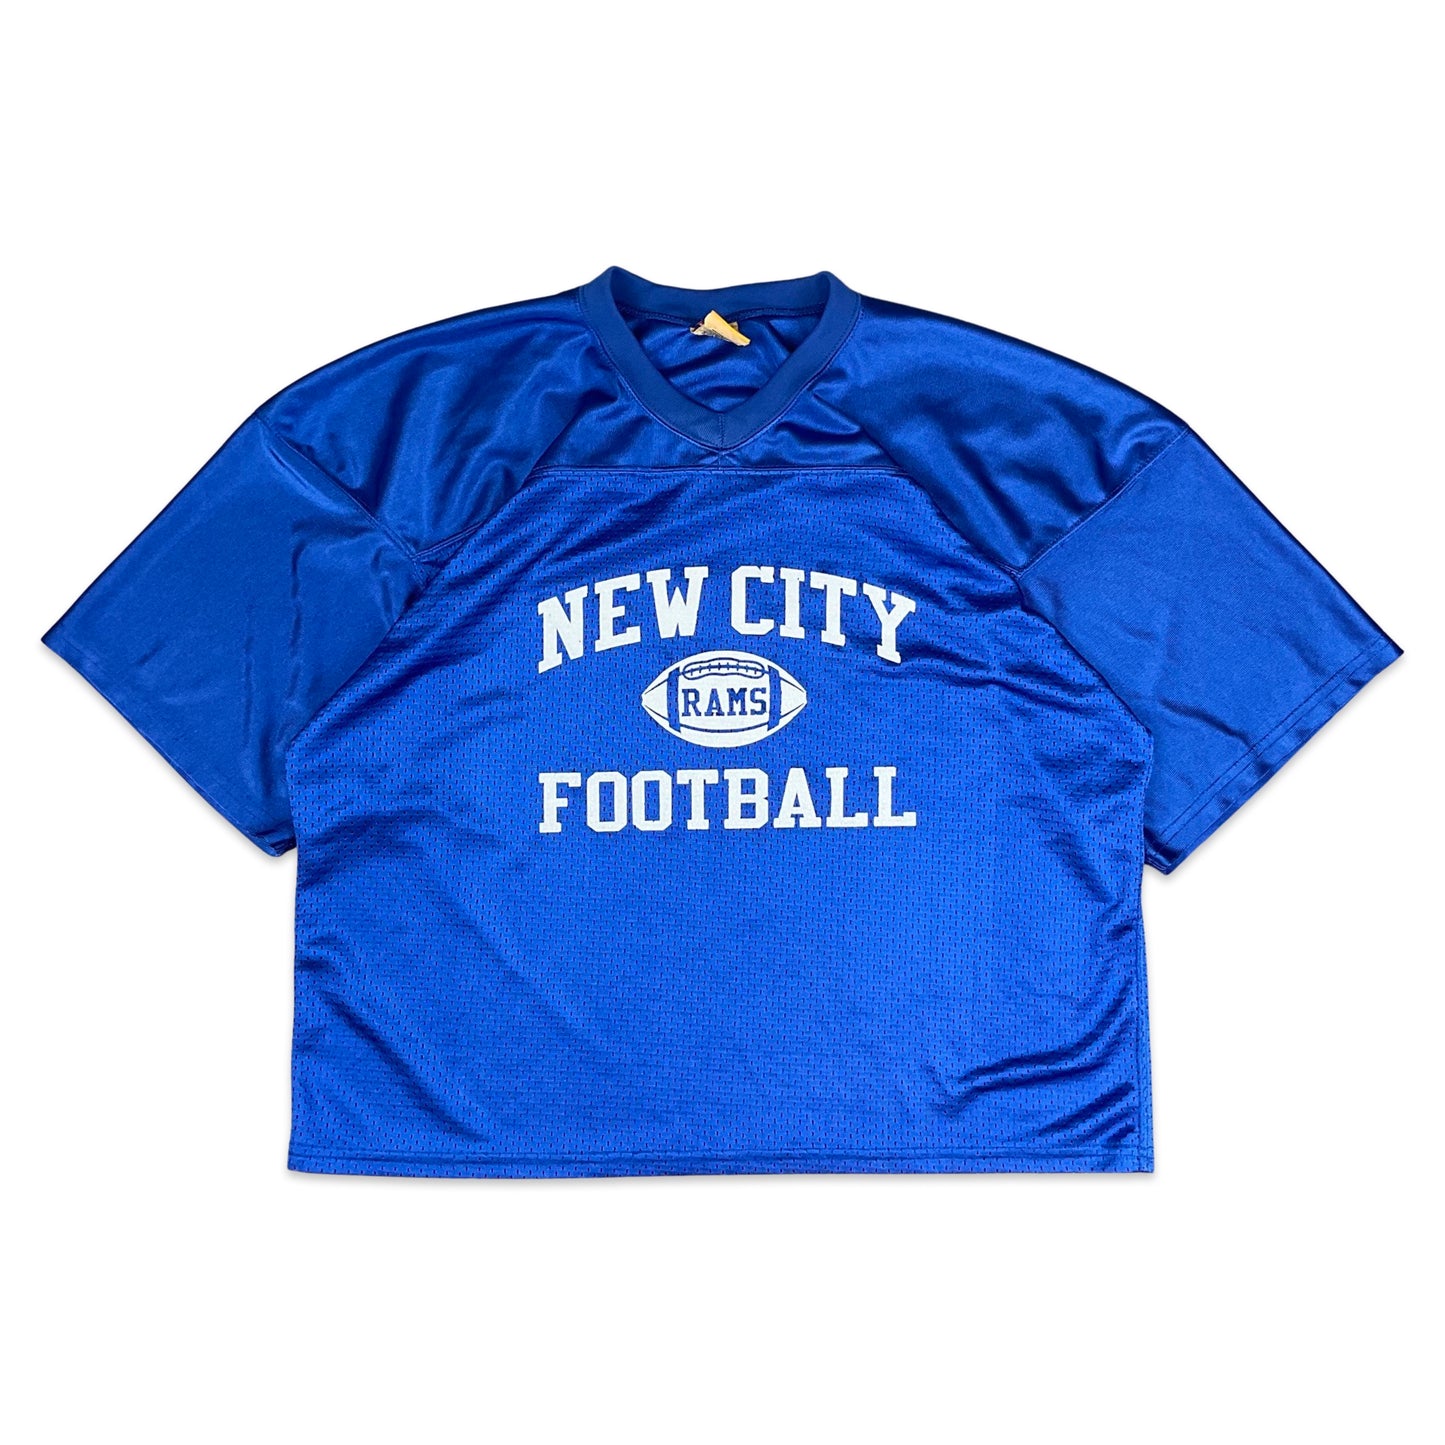 Vintage American Football Blue Jersey M L